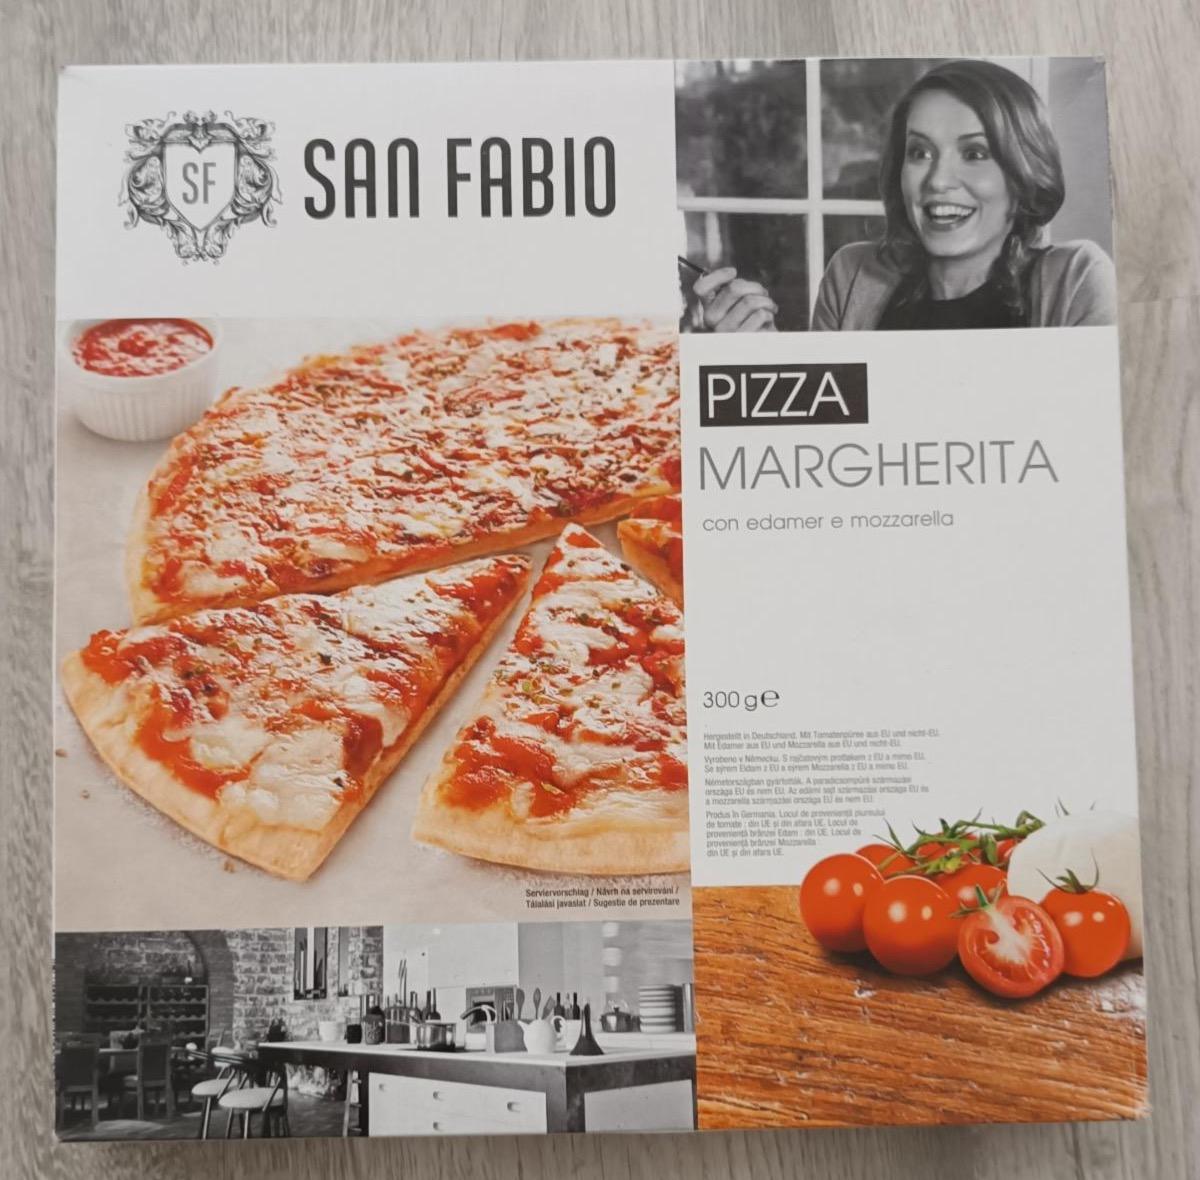 Képek - Margherita pizza San Fabio